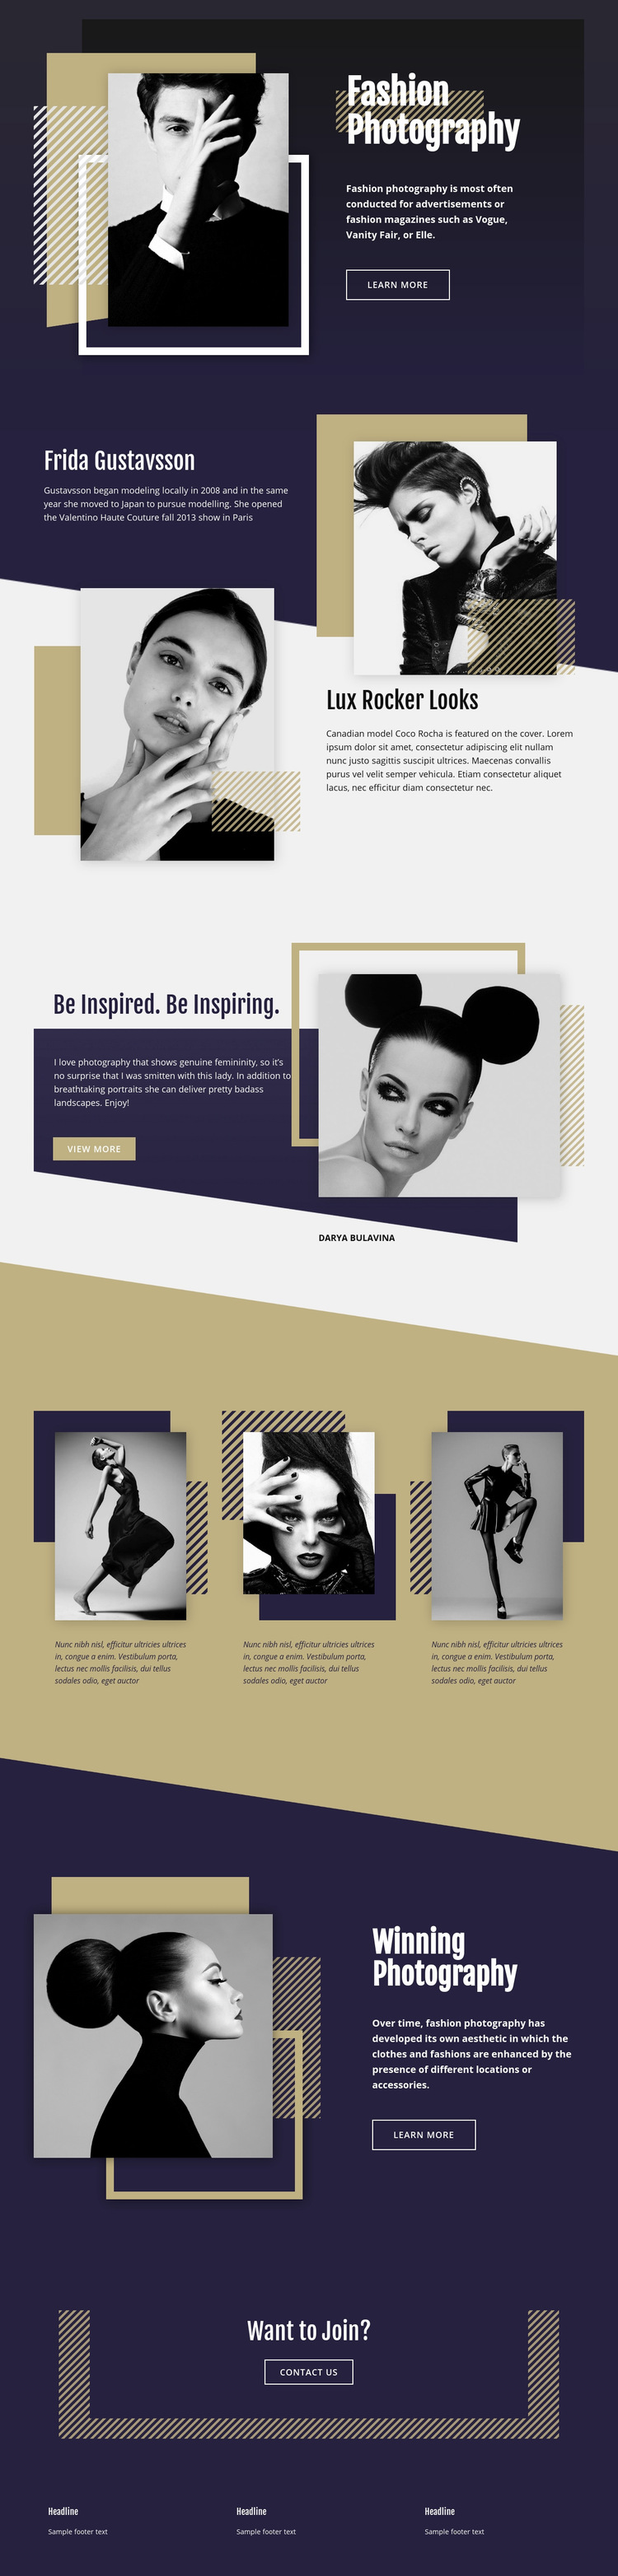 Fashion Photography Web Page Design